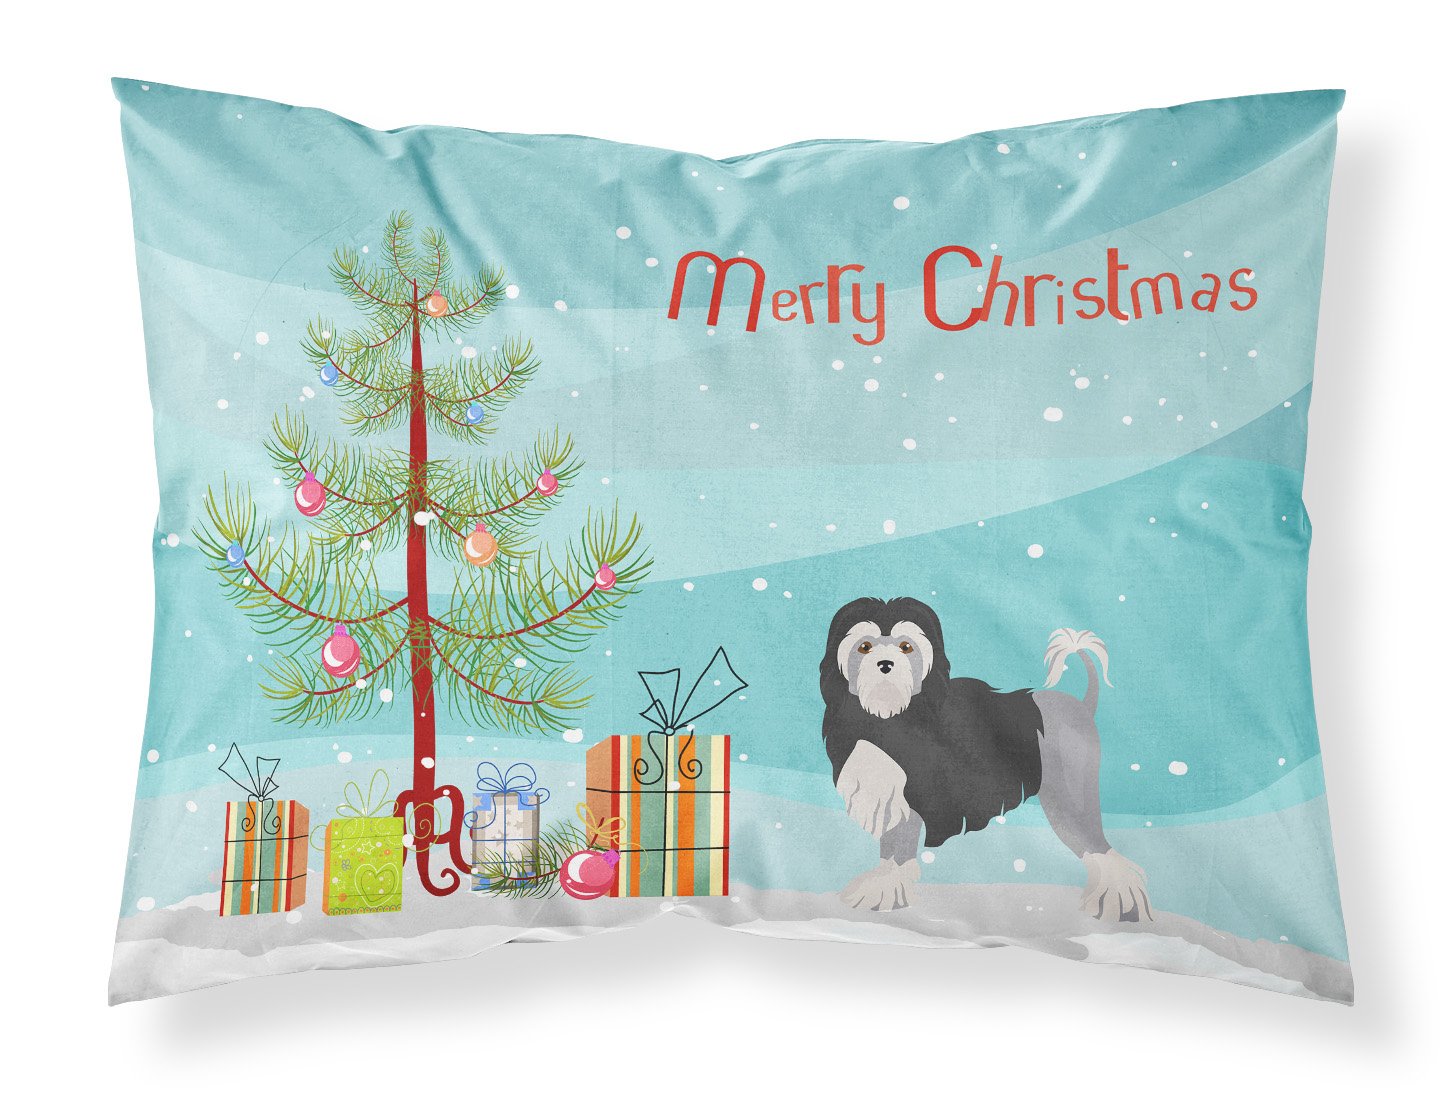 Löwchen or Little Lion Dog Christmas Tree Fabric Standard Pillowcase CK3470PILLOWCASE by Caroline's Treasures